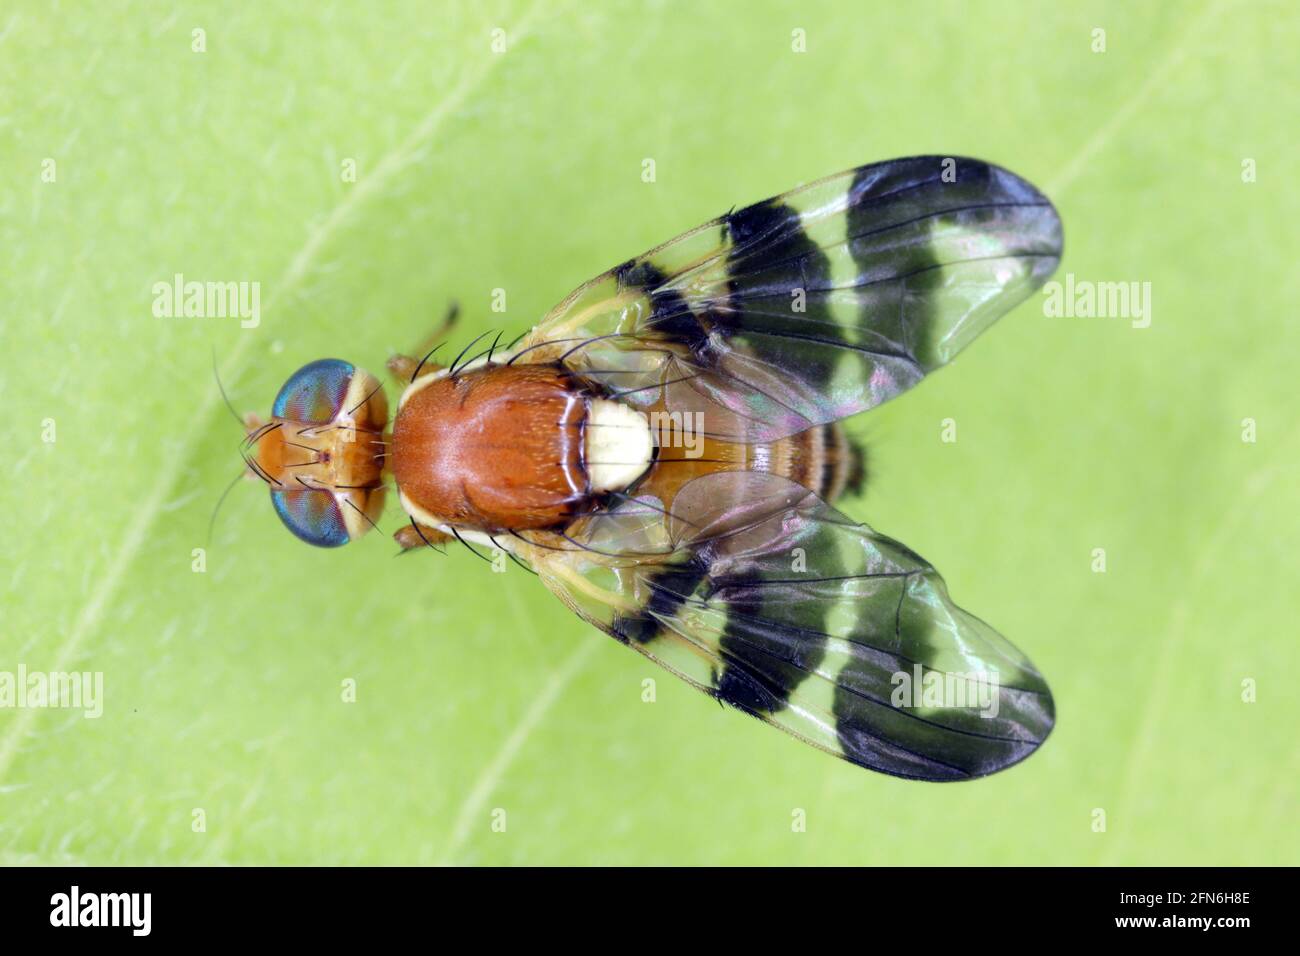 Walnut husk fly (Rhagoletis completa) it is quarantine species of tephritid or fruit flies whose larvae damage walnuts. Stock Photo